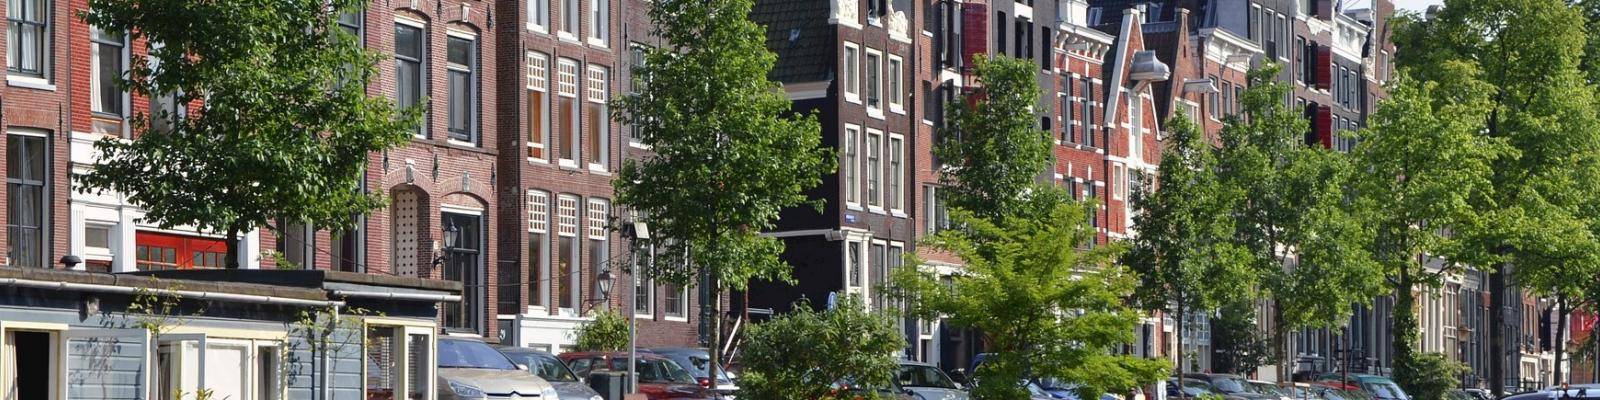 huizen Amsterdam